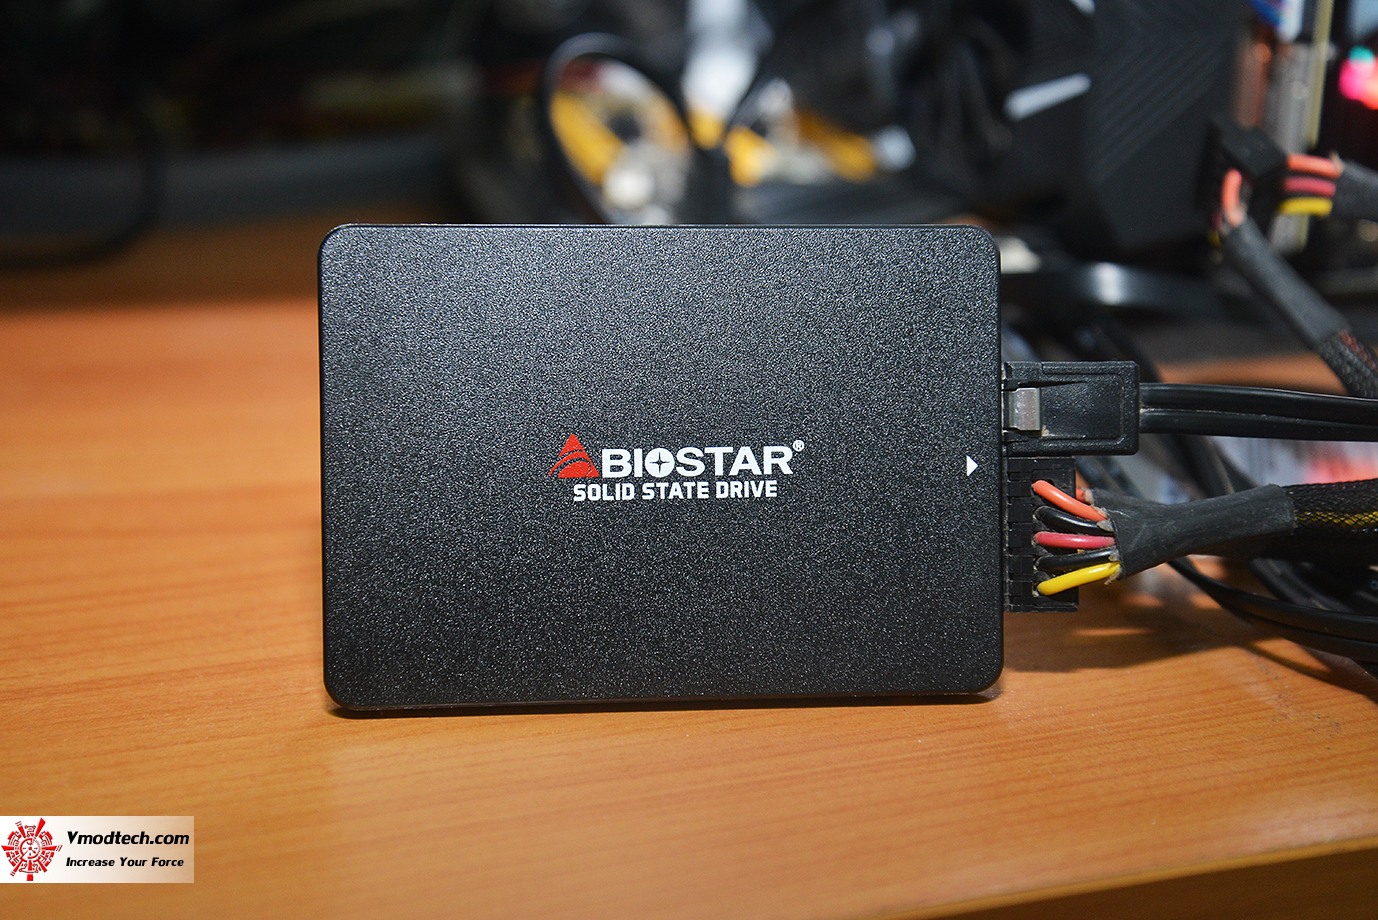 dsc 99461 Biostar SSD S130 512GB Review